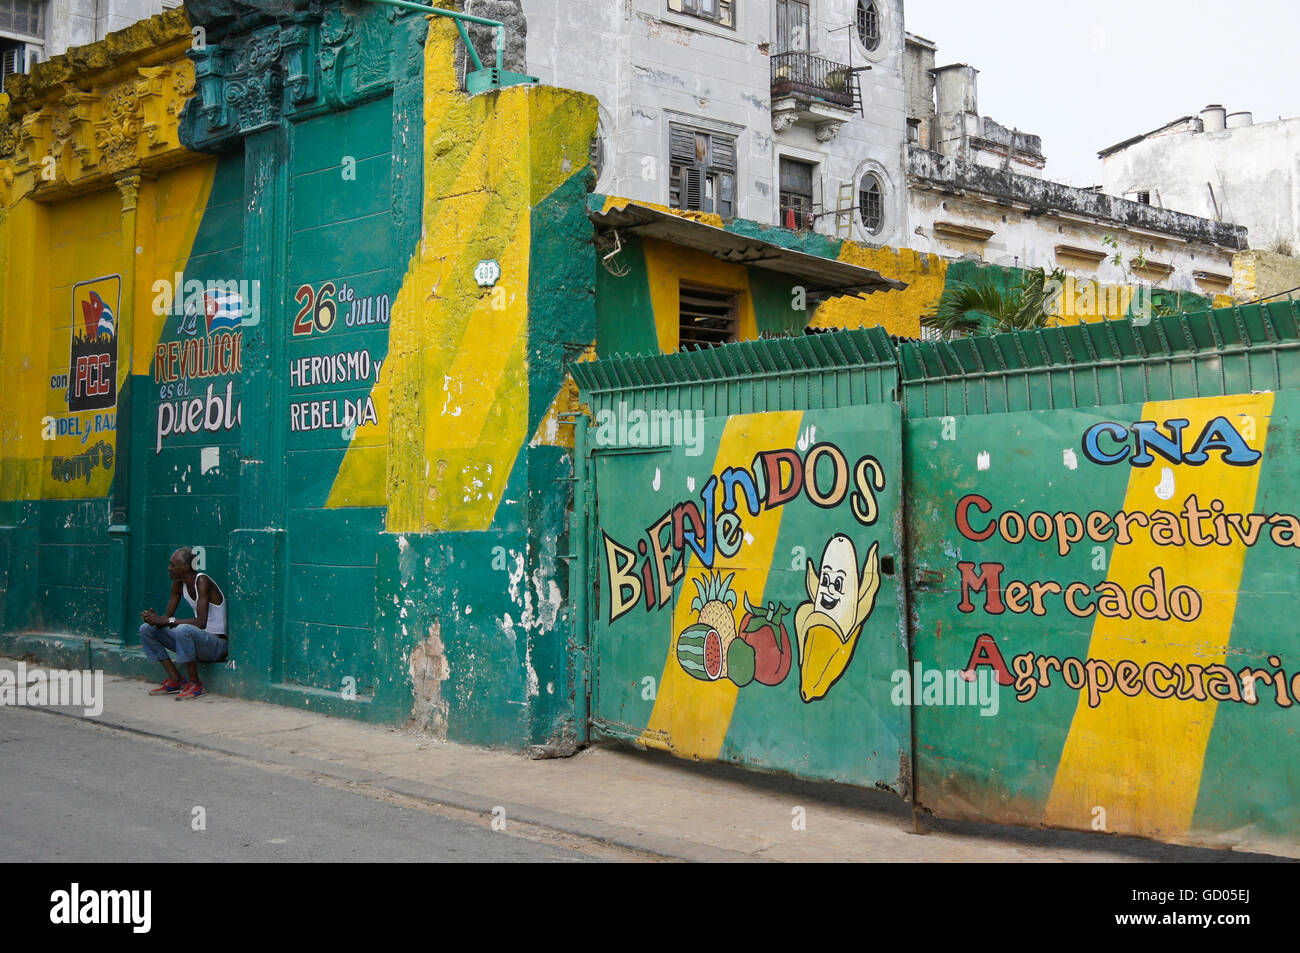 Bunte Gebäude und Markt-Gate, Habana Vieja (Altstadt von Havanna), Kuba Stockfoto